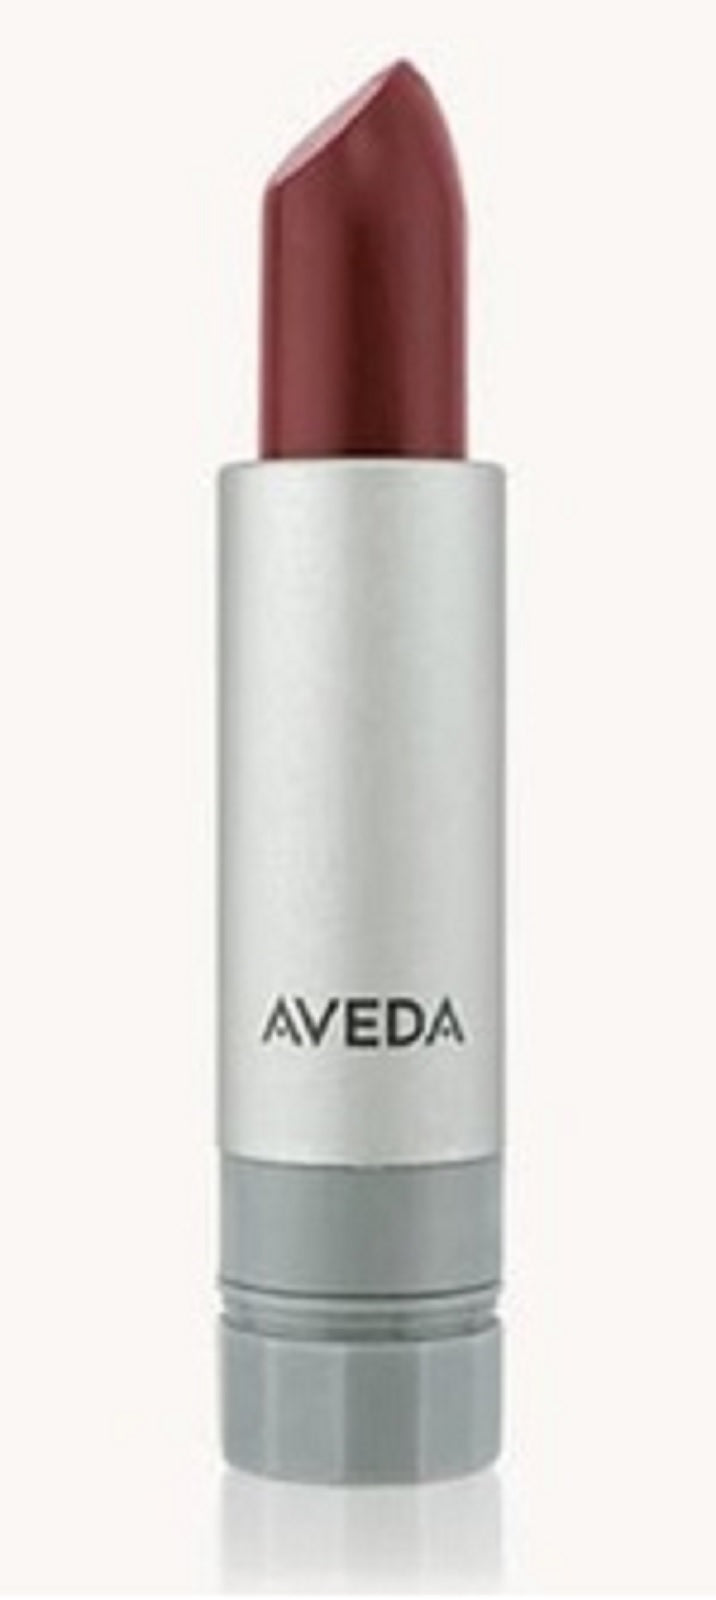 AVEDA new nib lipstick lip color SHEER ROSELEAF 401 Nourish-Mint discontinued